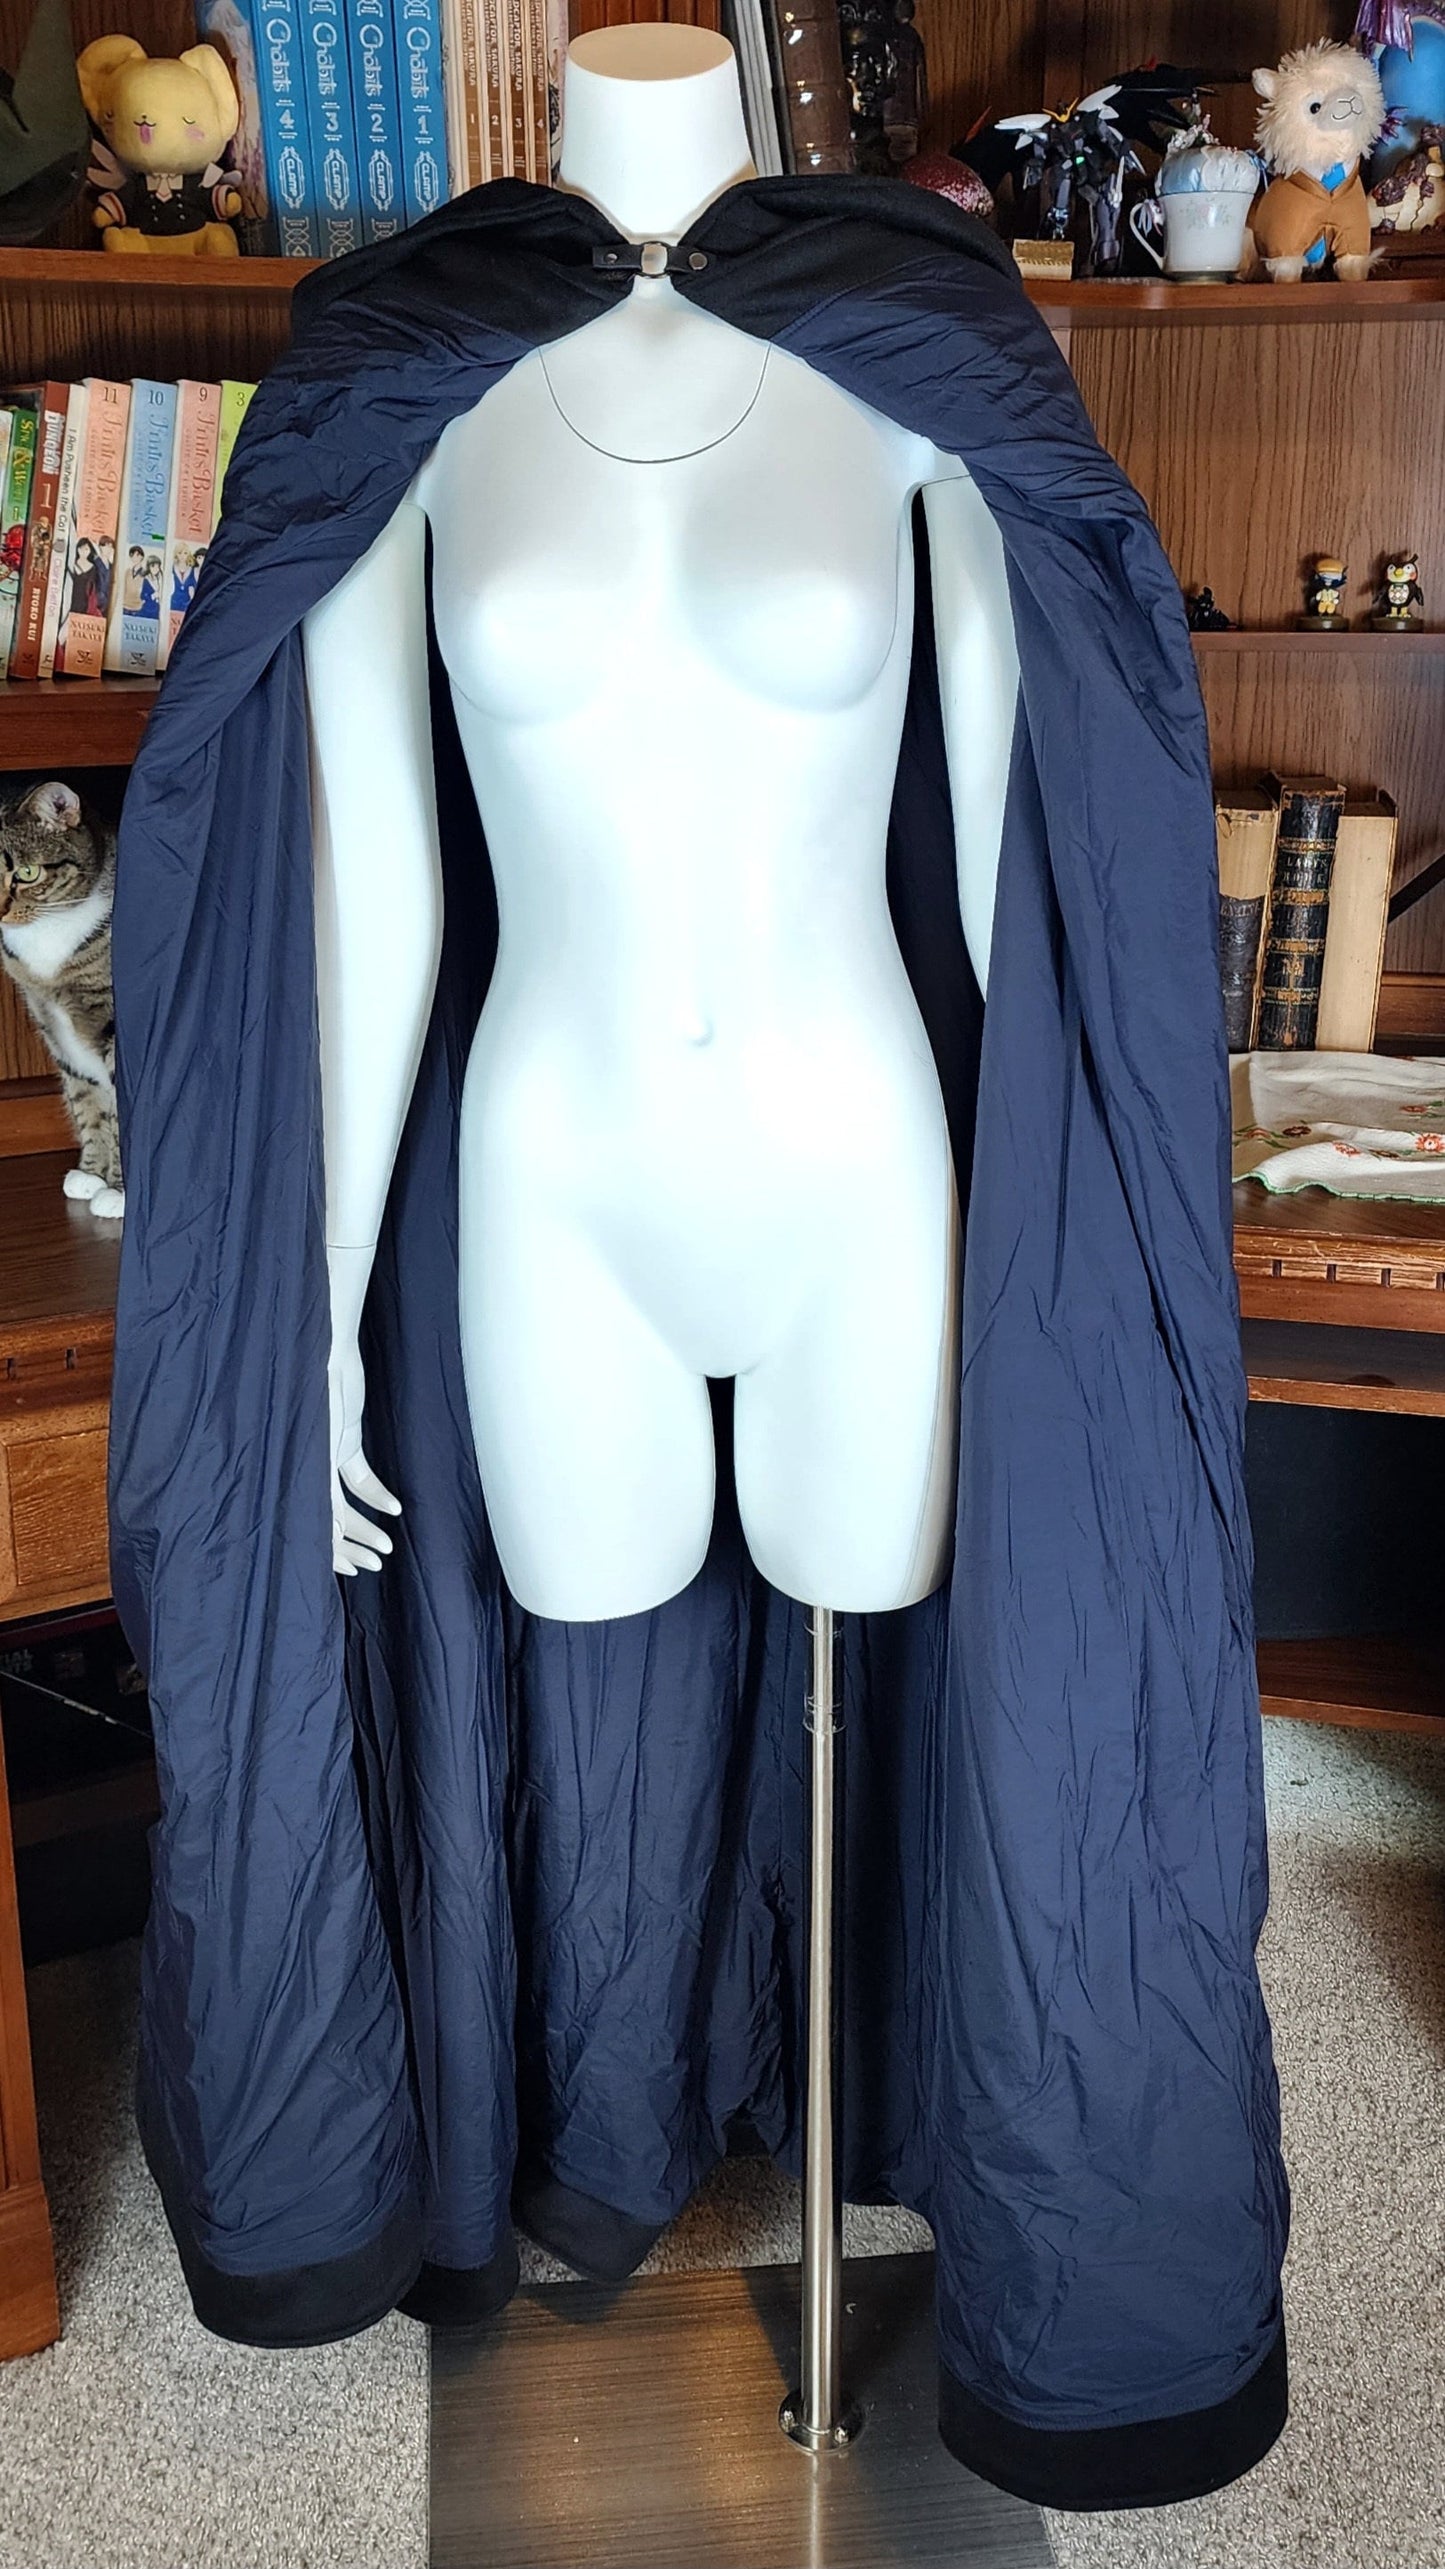 Winter Wanderer Cloak- Black cloak with Navy water resistant lining